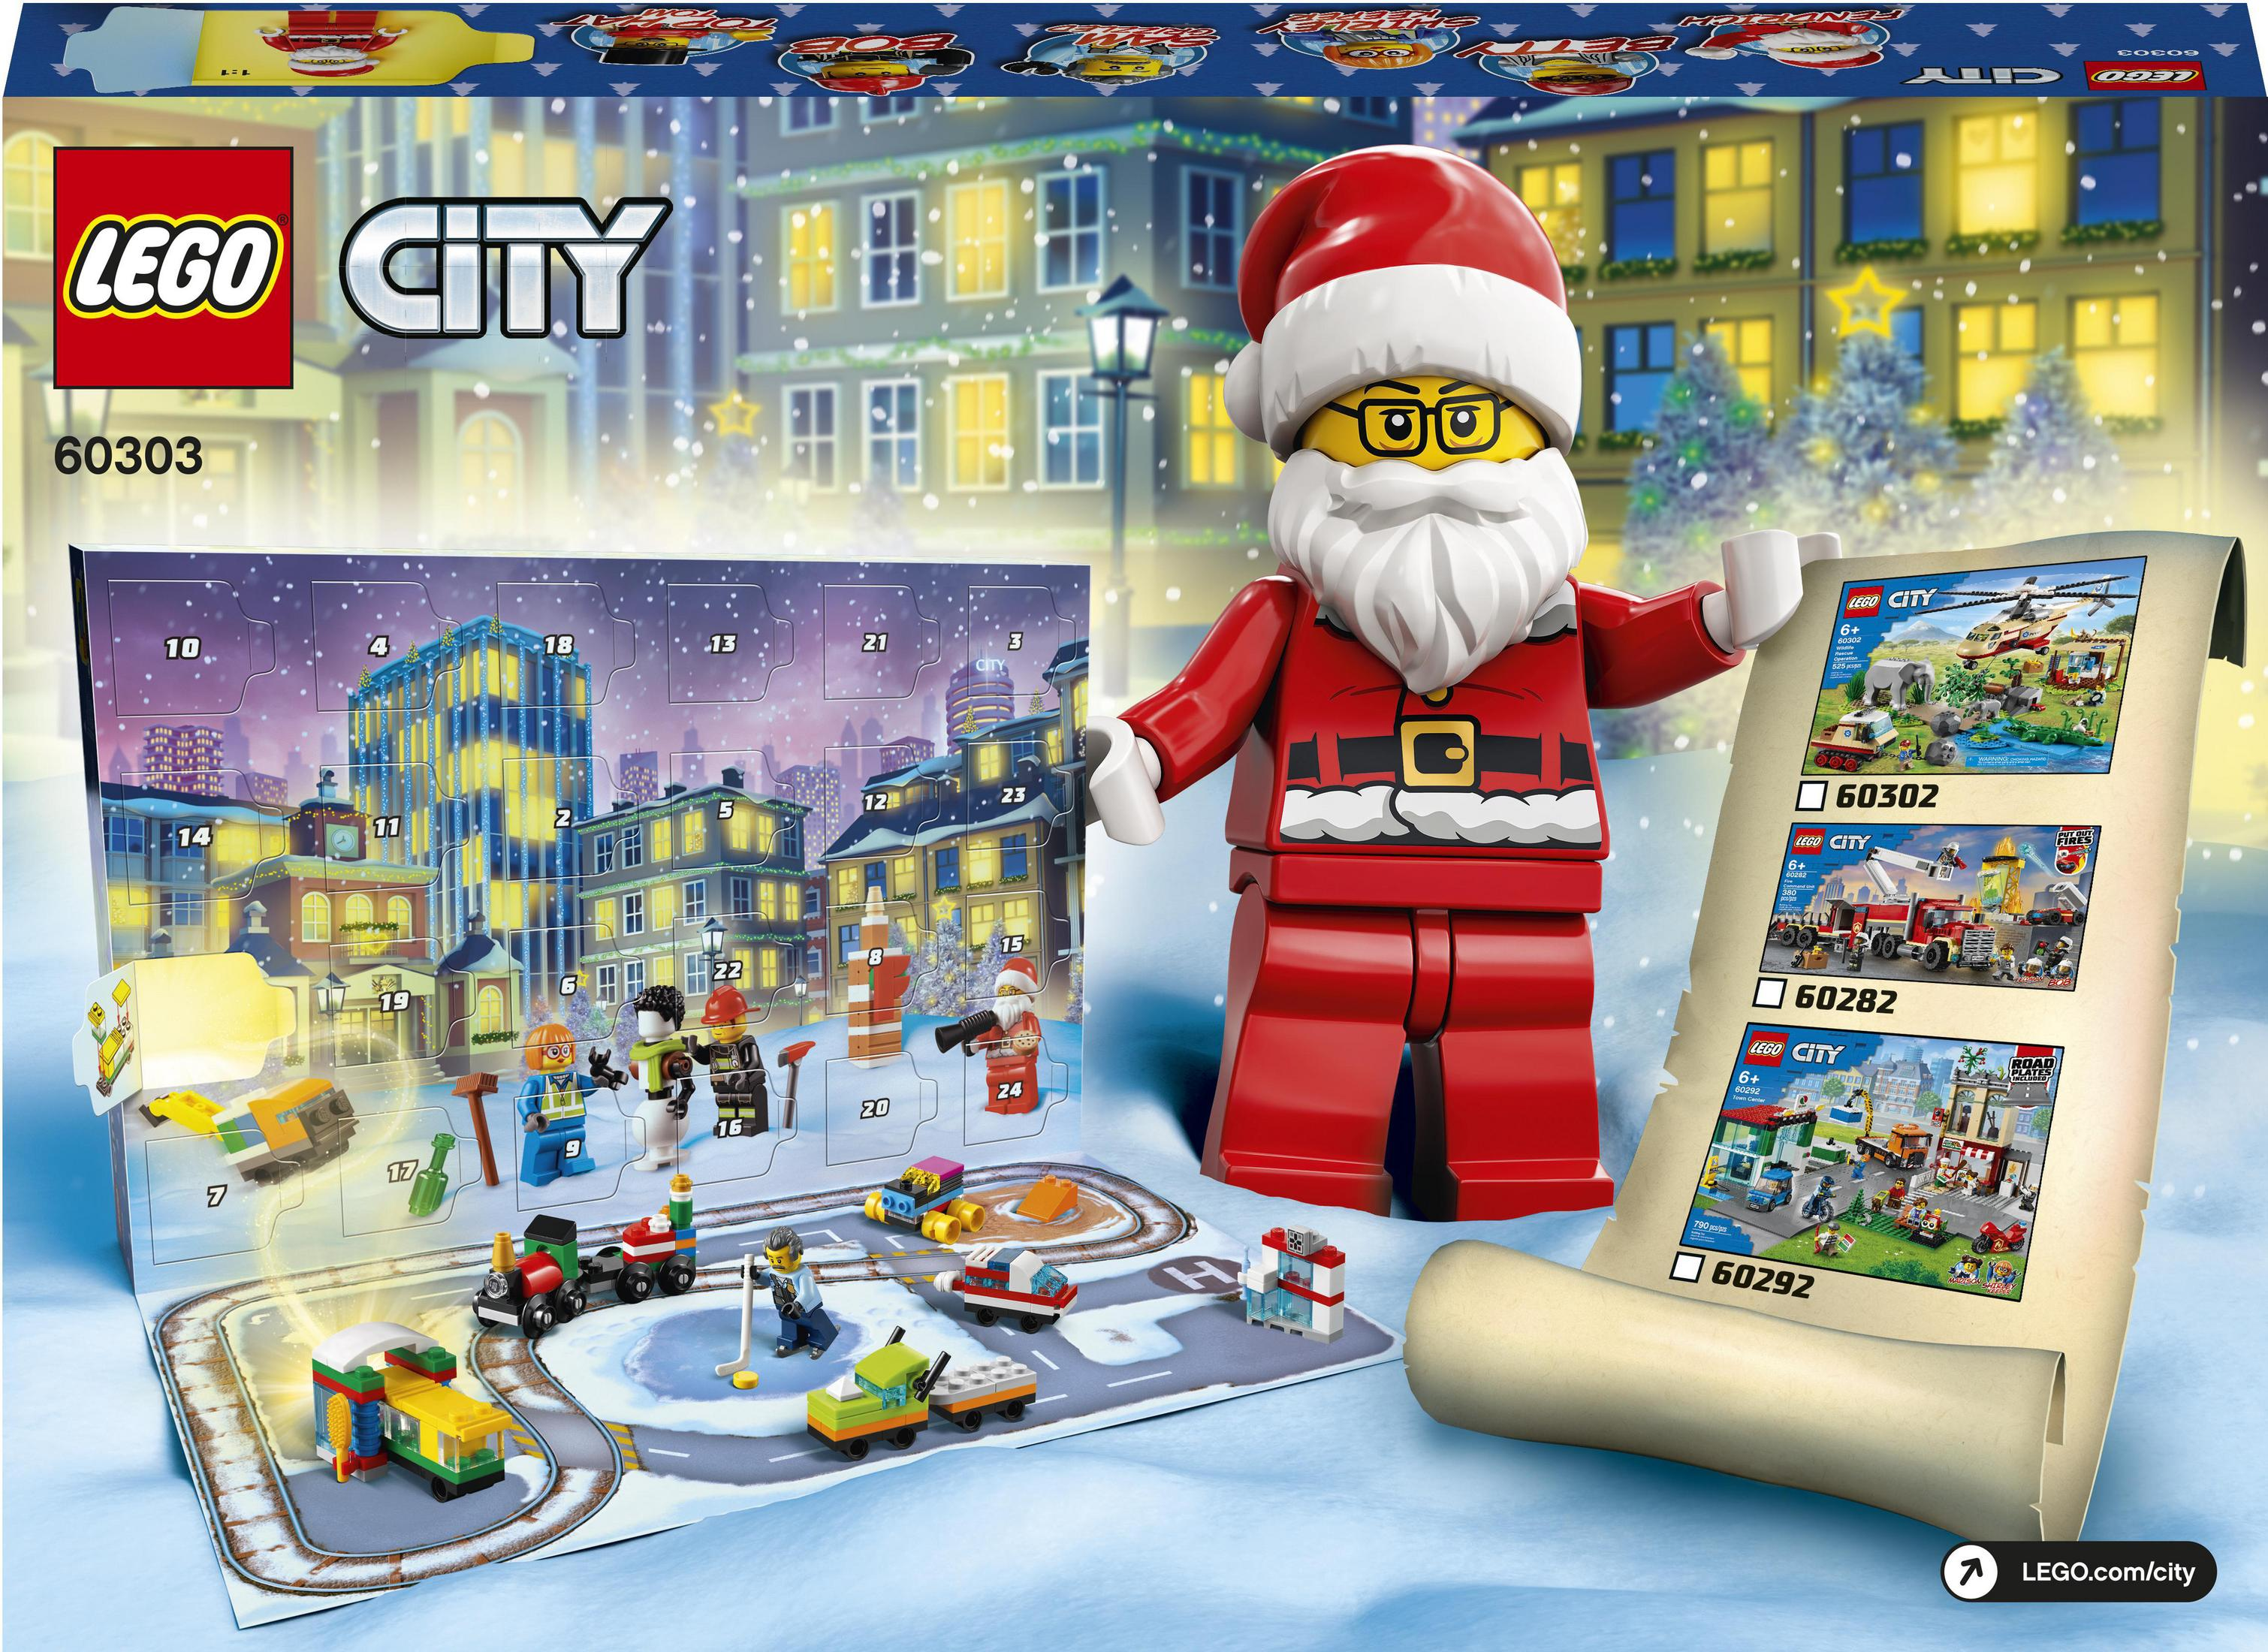 LEGO 60303 CITY ADVENTSKALENDER Mehrfarbig LEGO Adventskalender